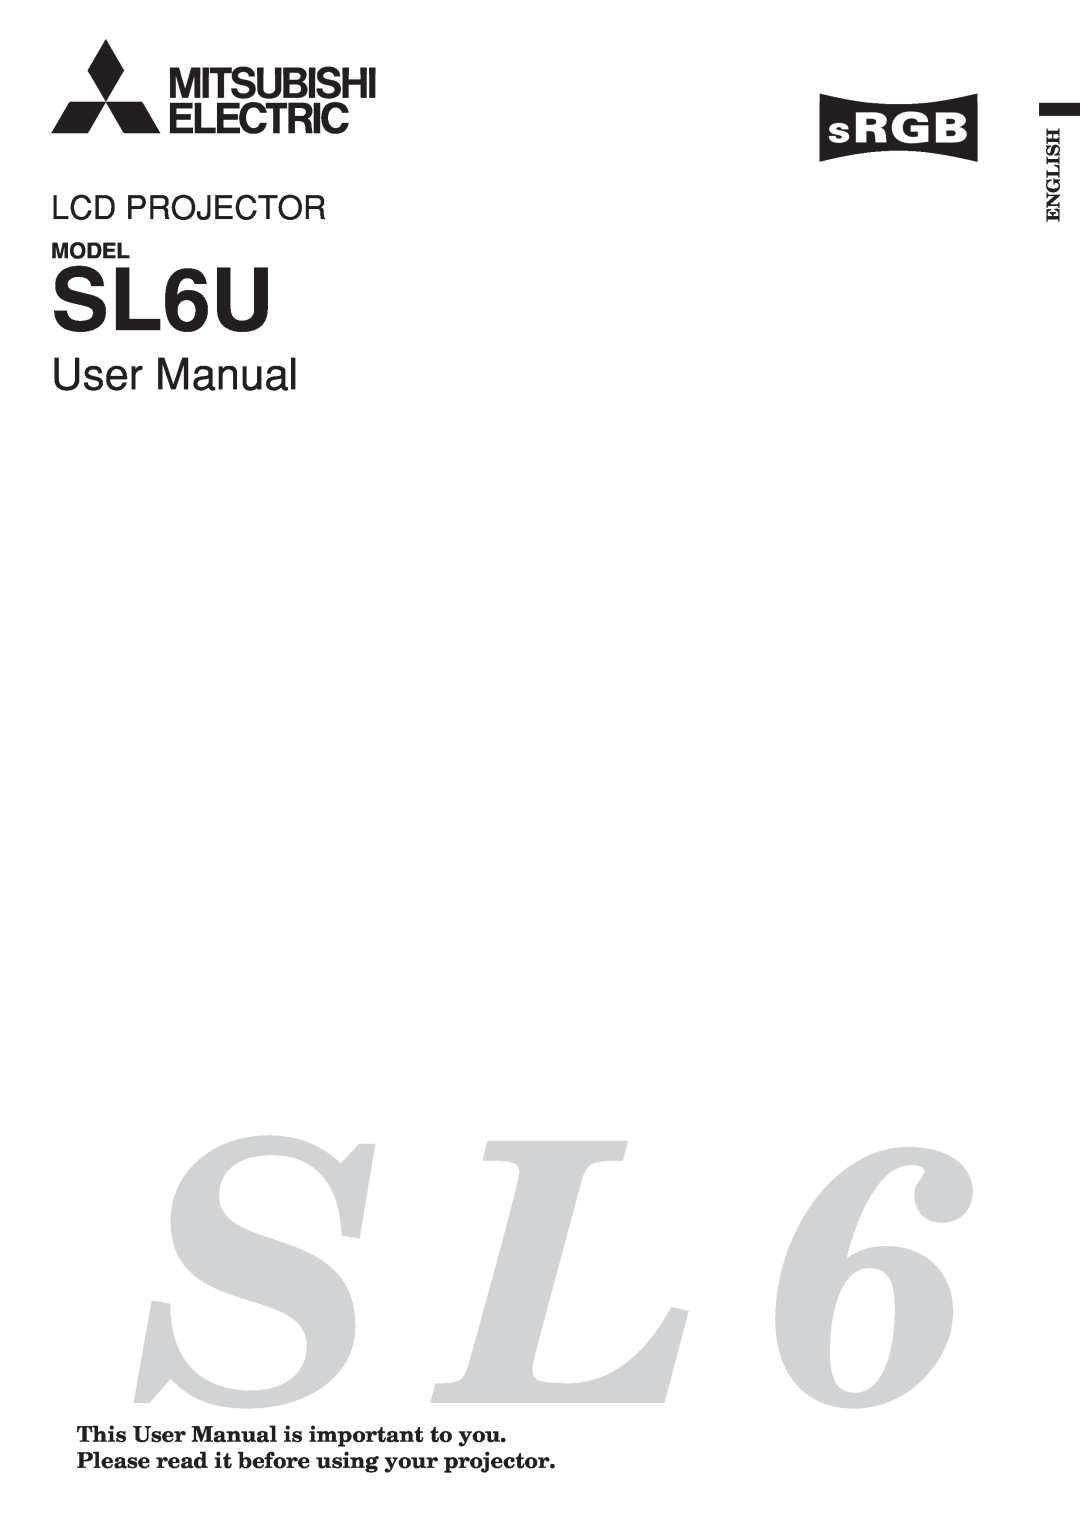 Mitsubishi Electronics XL6U user manual SL6U, User Manual, Lcd Projector, Model 